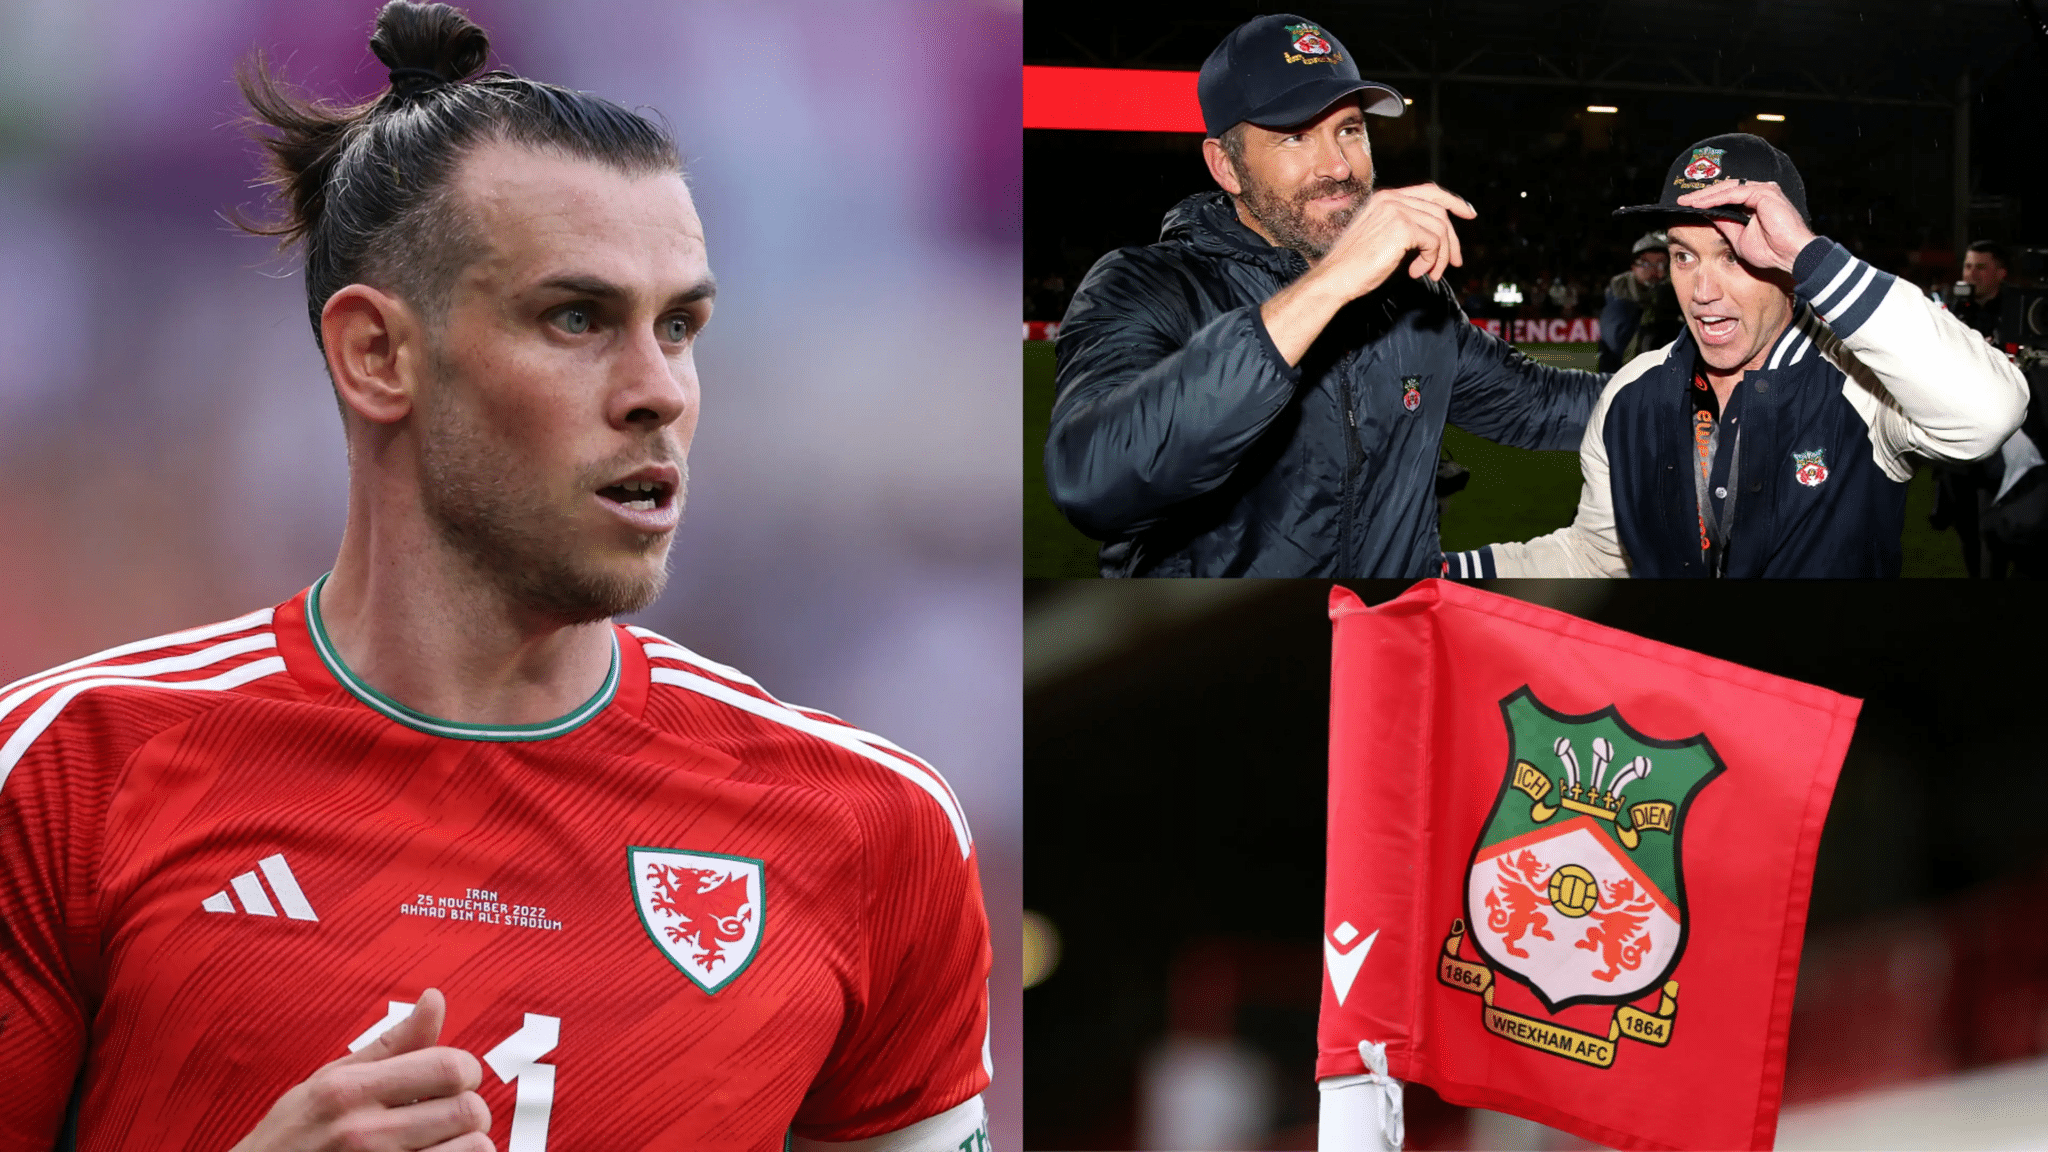 Offre de Wrexham pour sortir de sa retraite : Gareth Bale a pris sa décision